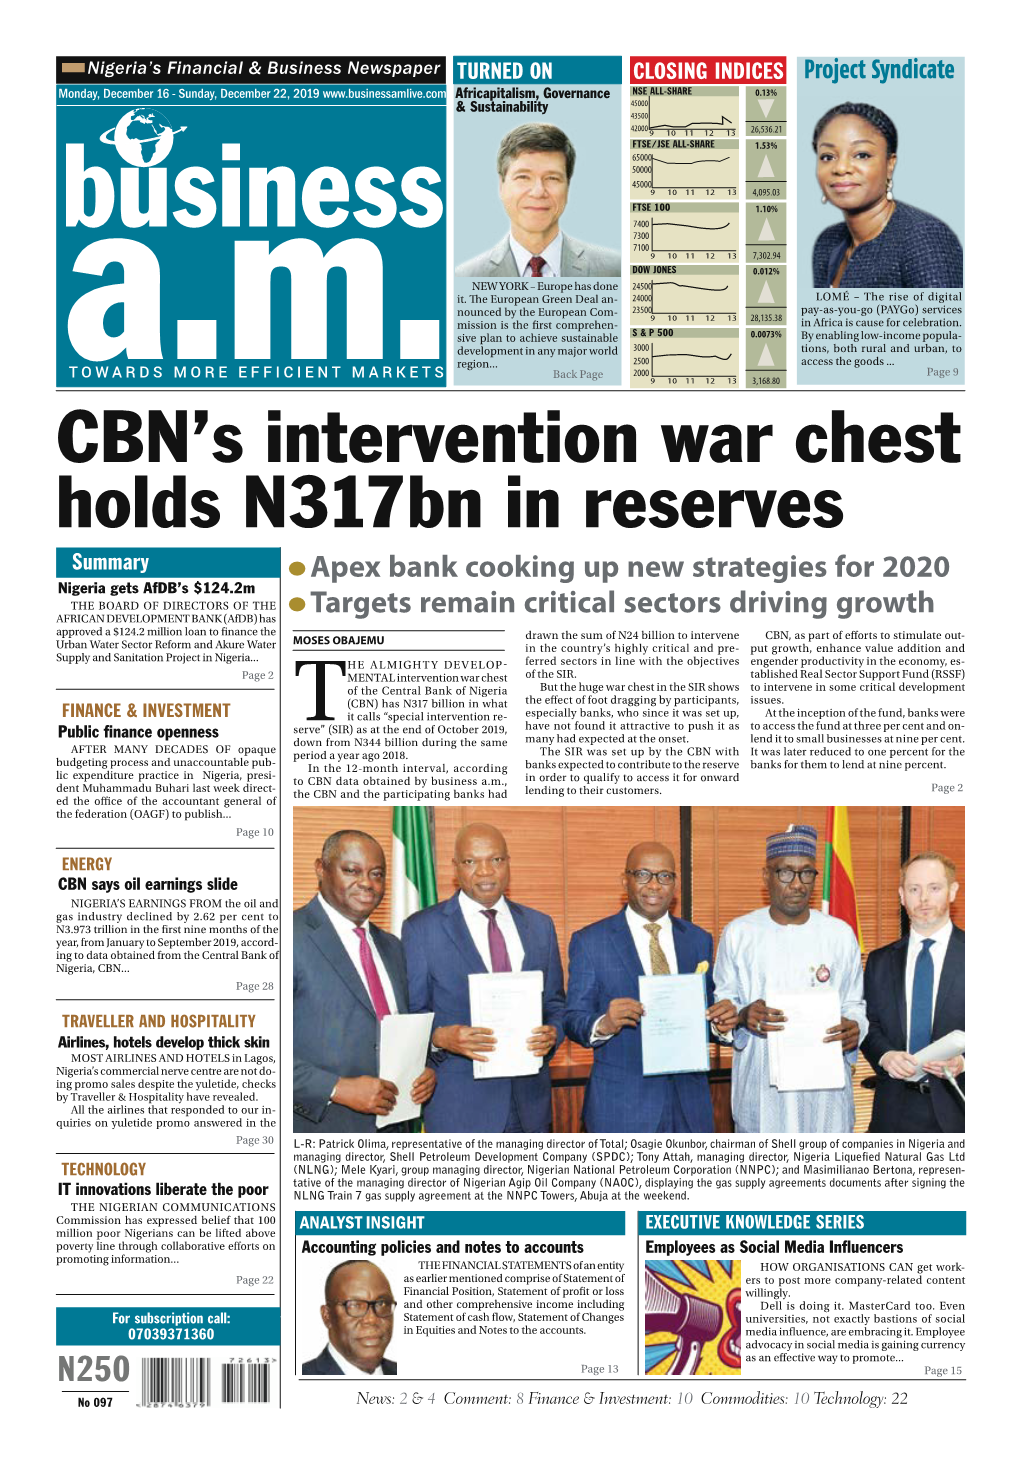 CBN's Intervention War Chest Holds N317bn in Reserves